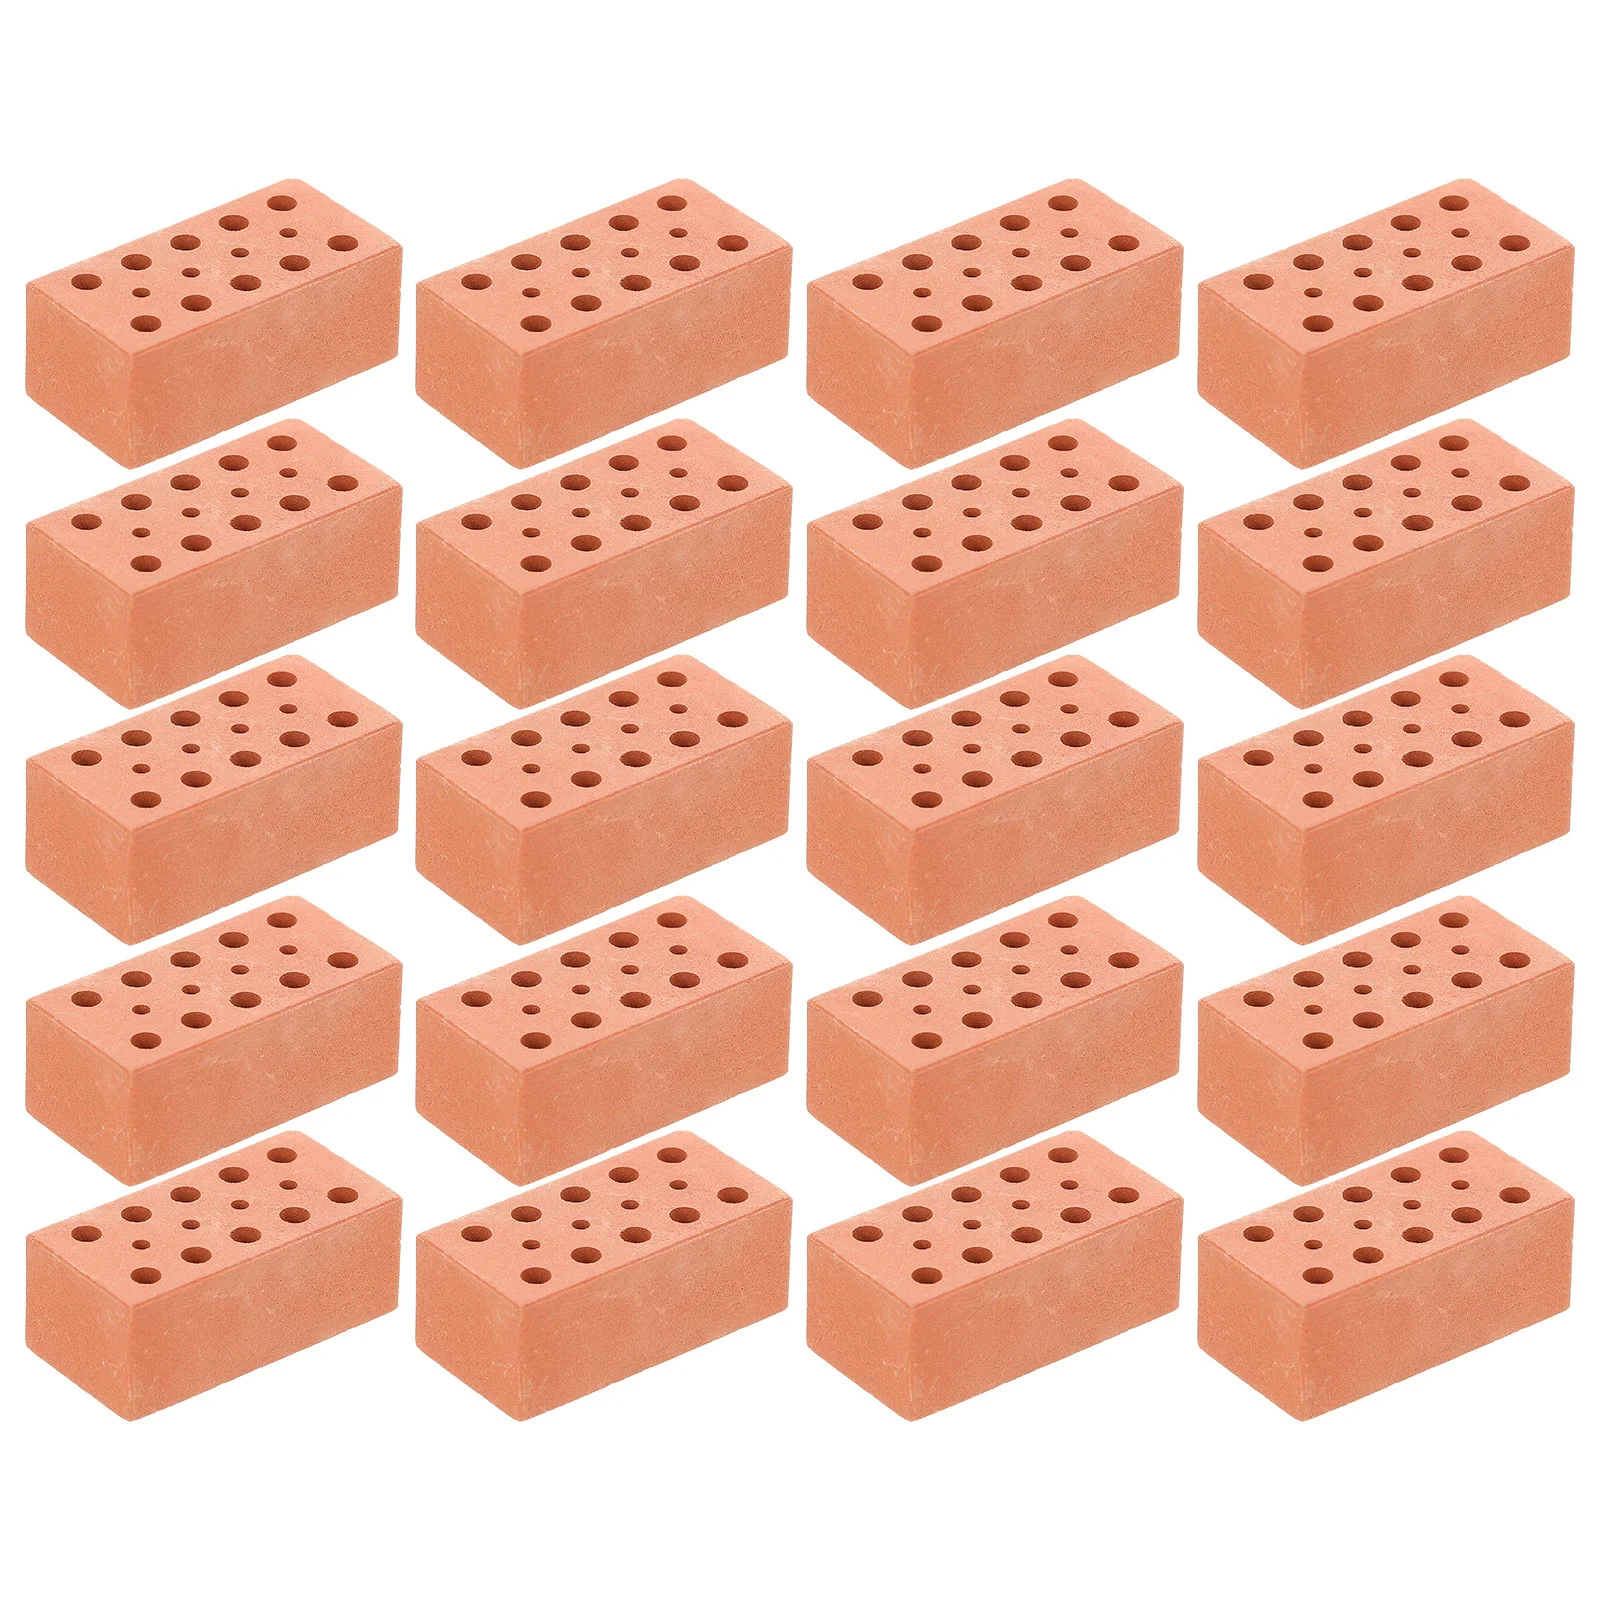 

20 Pcs Simulated Brick DIY Fake Bricks Fake Mini Bricks Micro Landscape Decor Miniature Wooden Toys Kids Models Small Wall